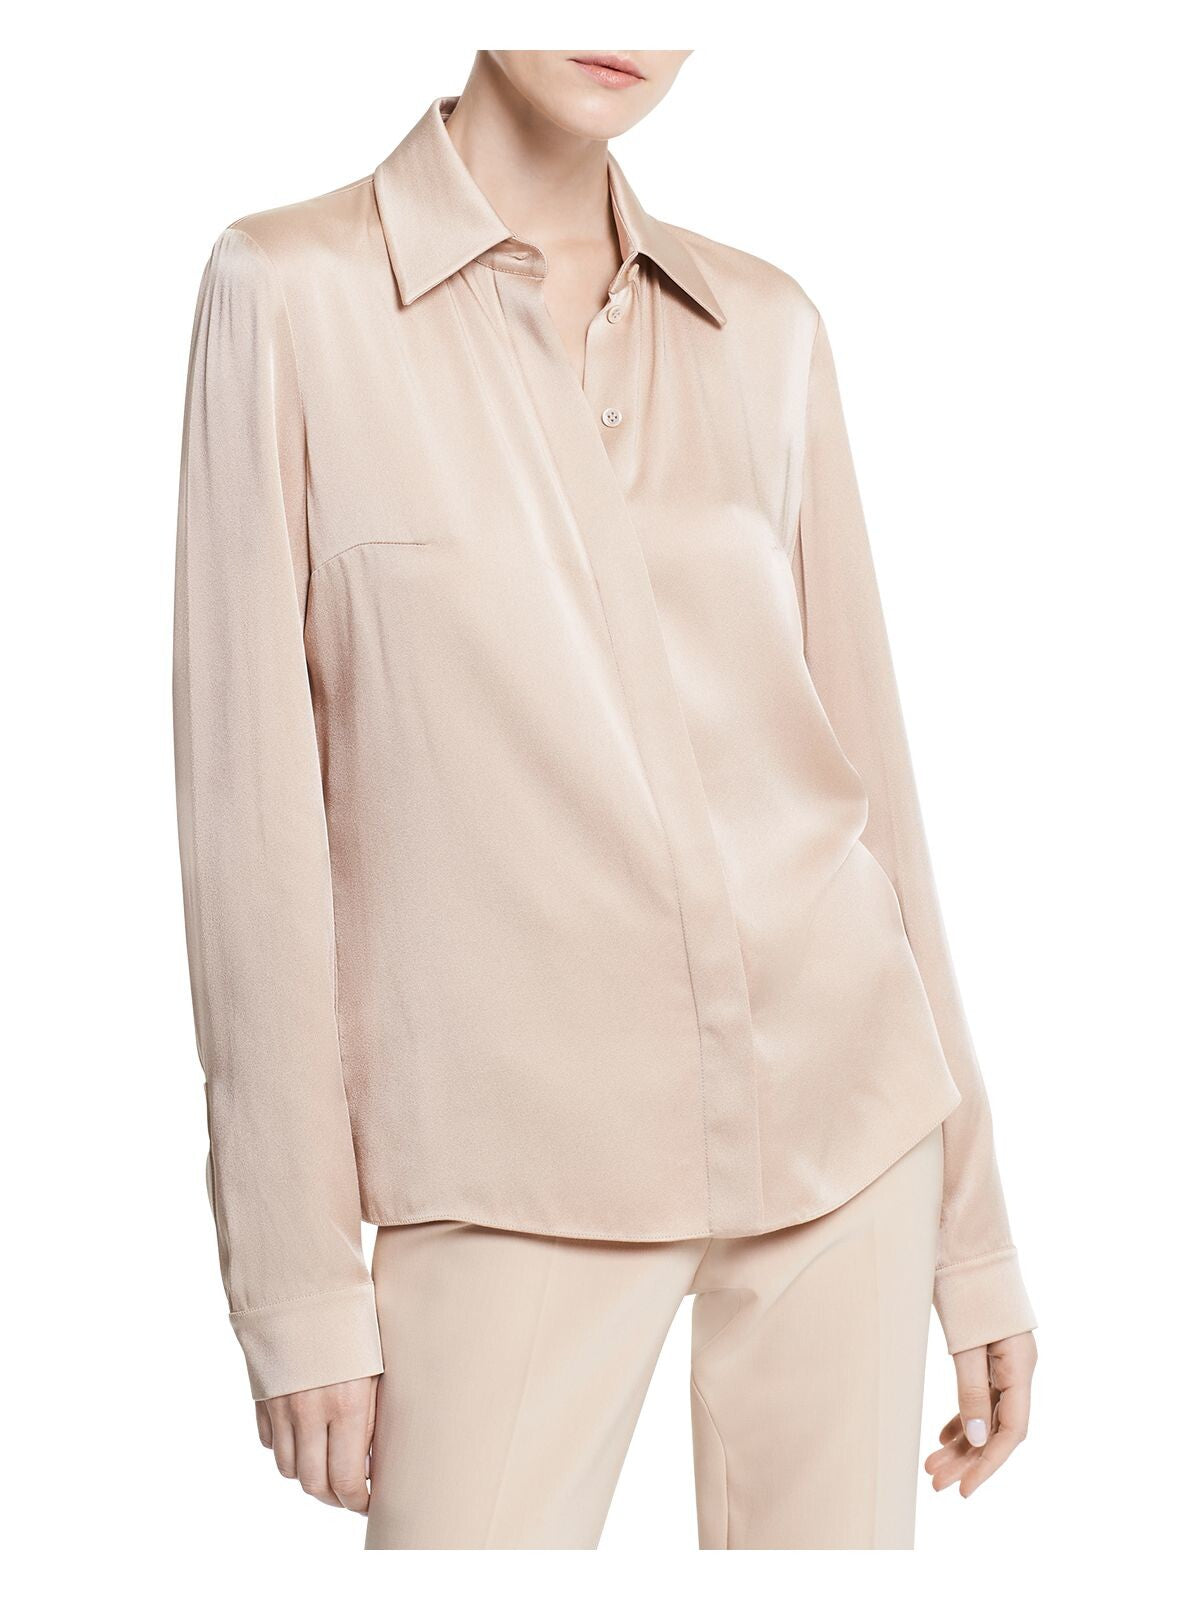 MICHAEL KORS Womens Beige Darted Shirttail Hem Cuffed Sleeve Collared Button Up Top 8